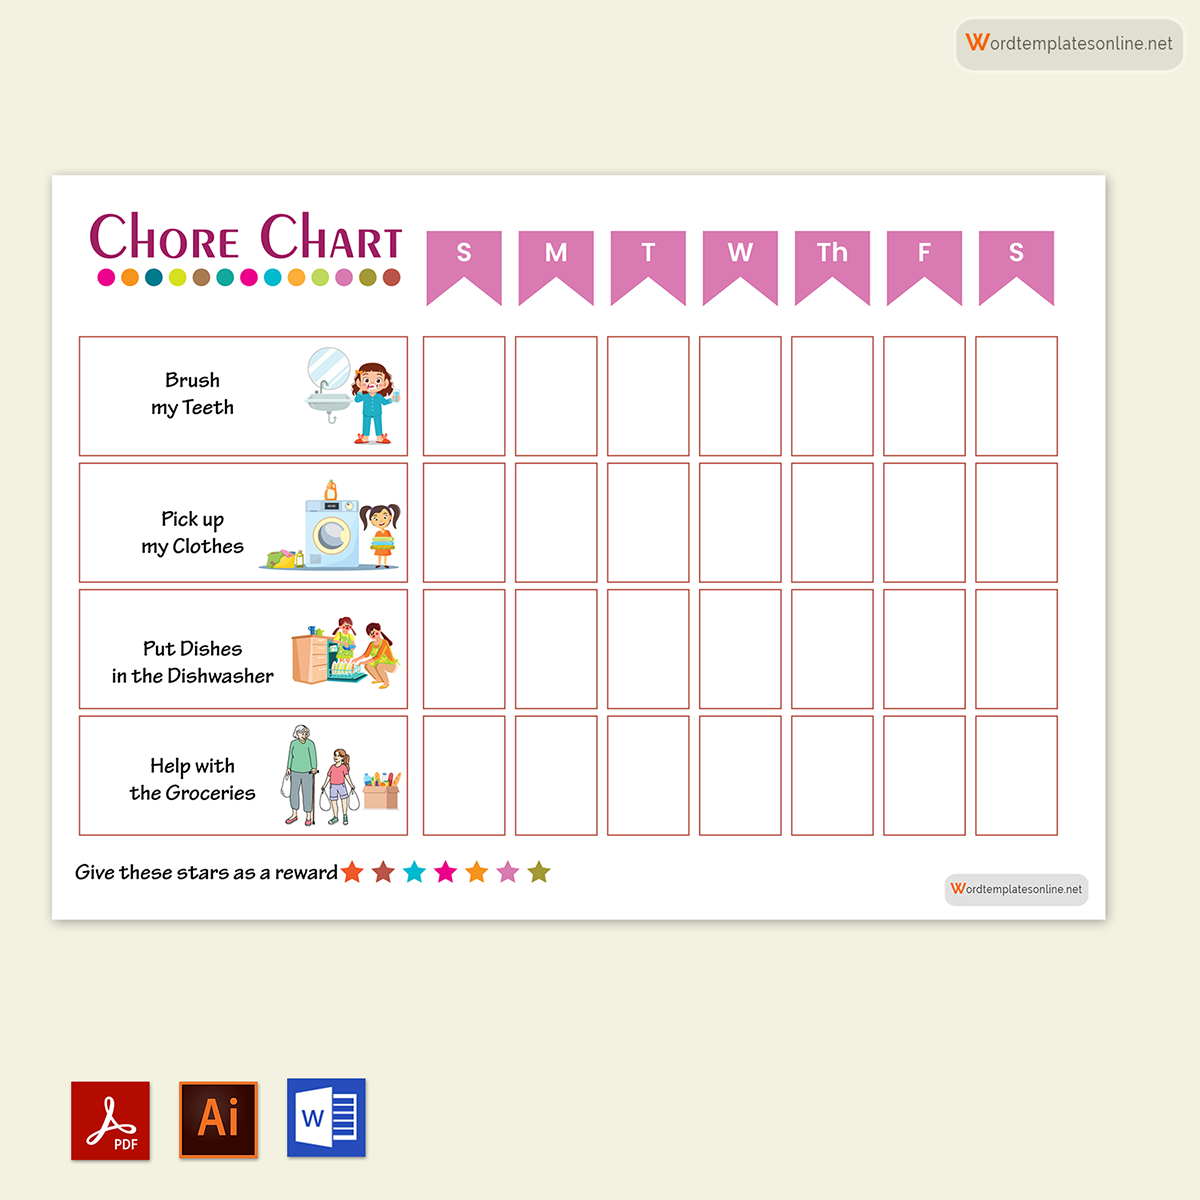  chore chart template